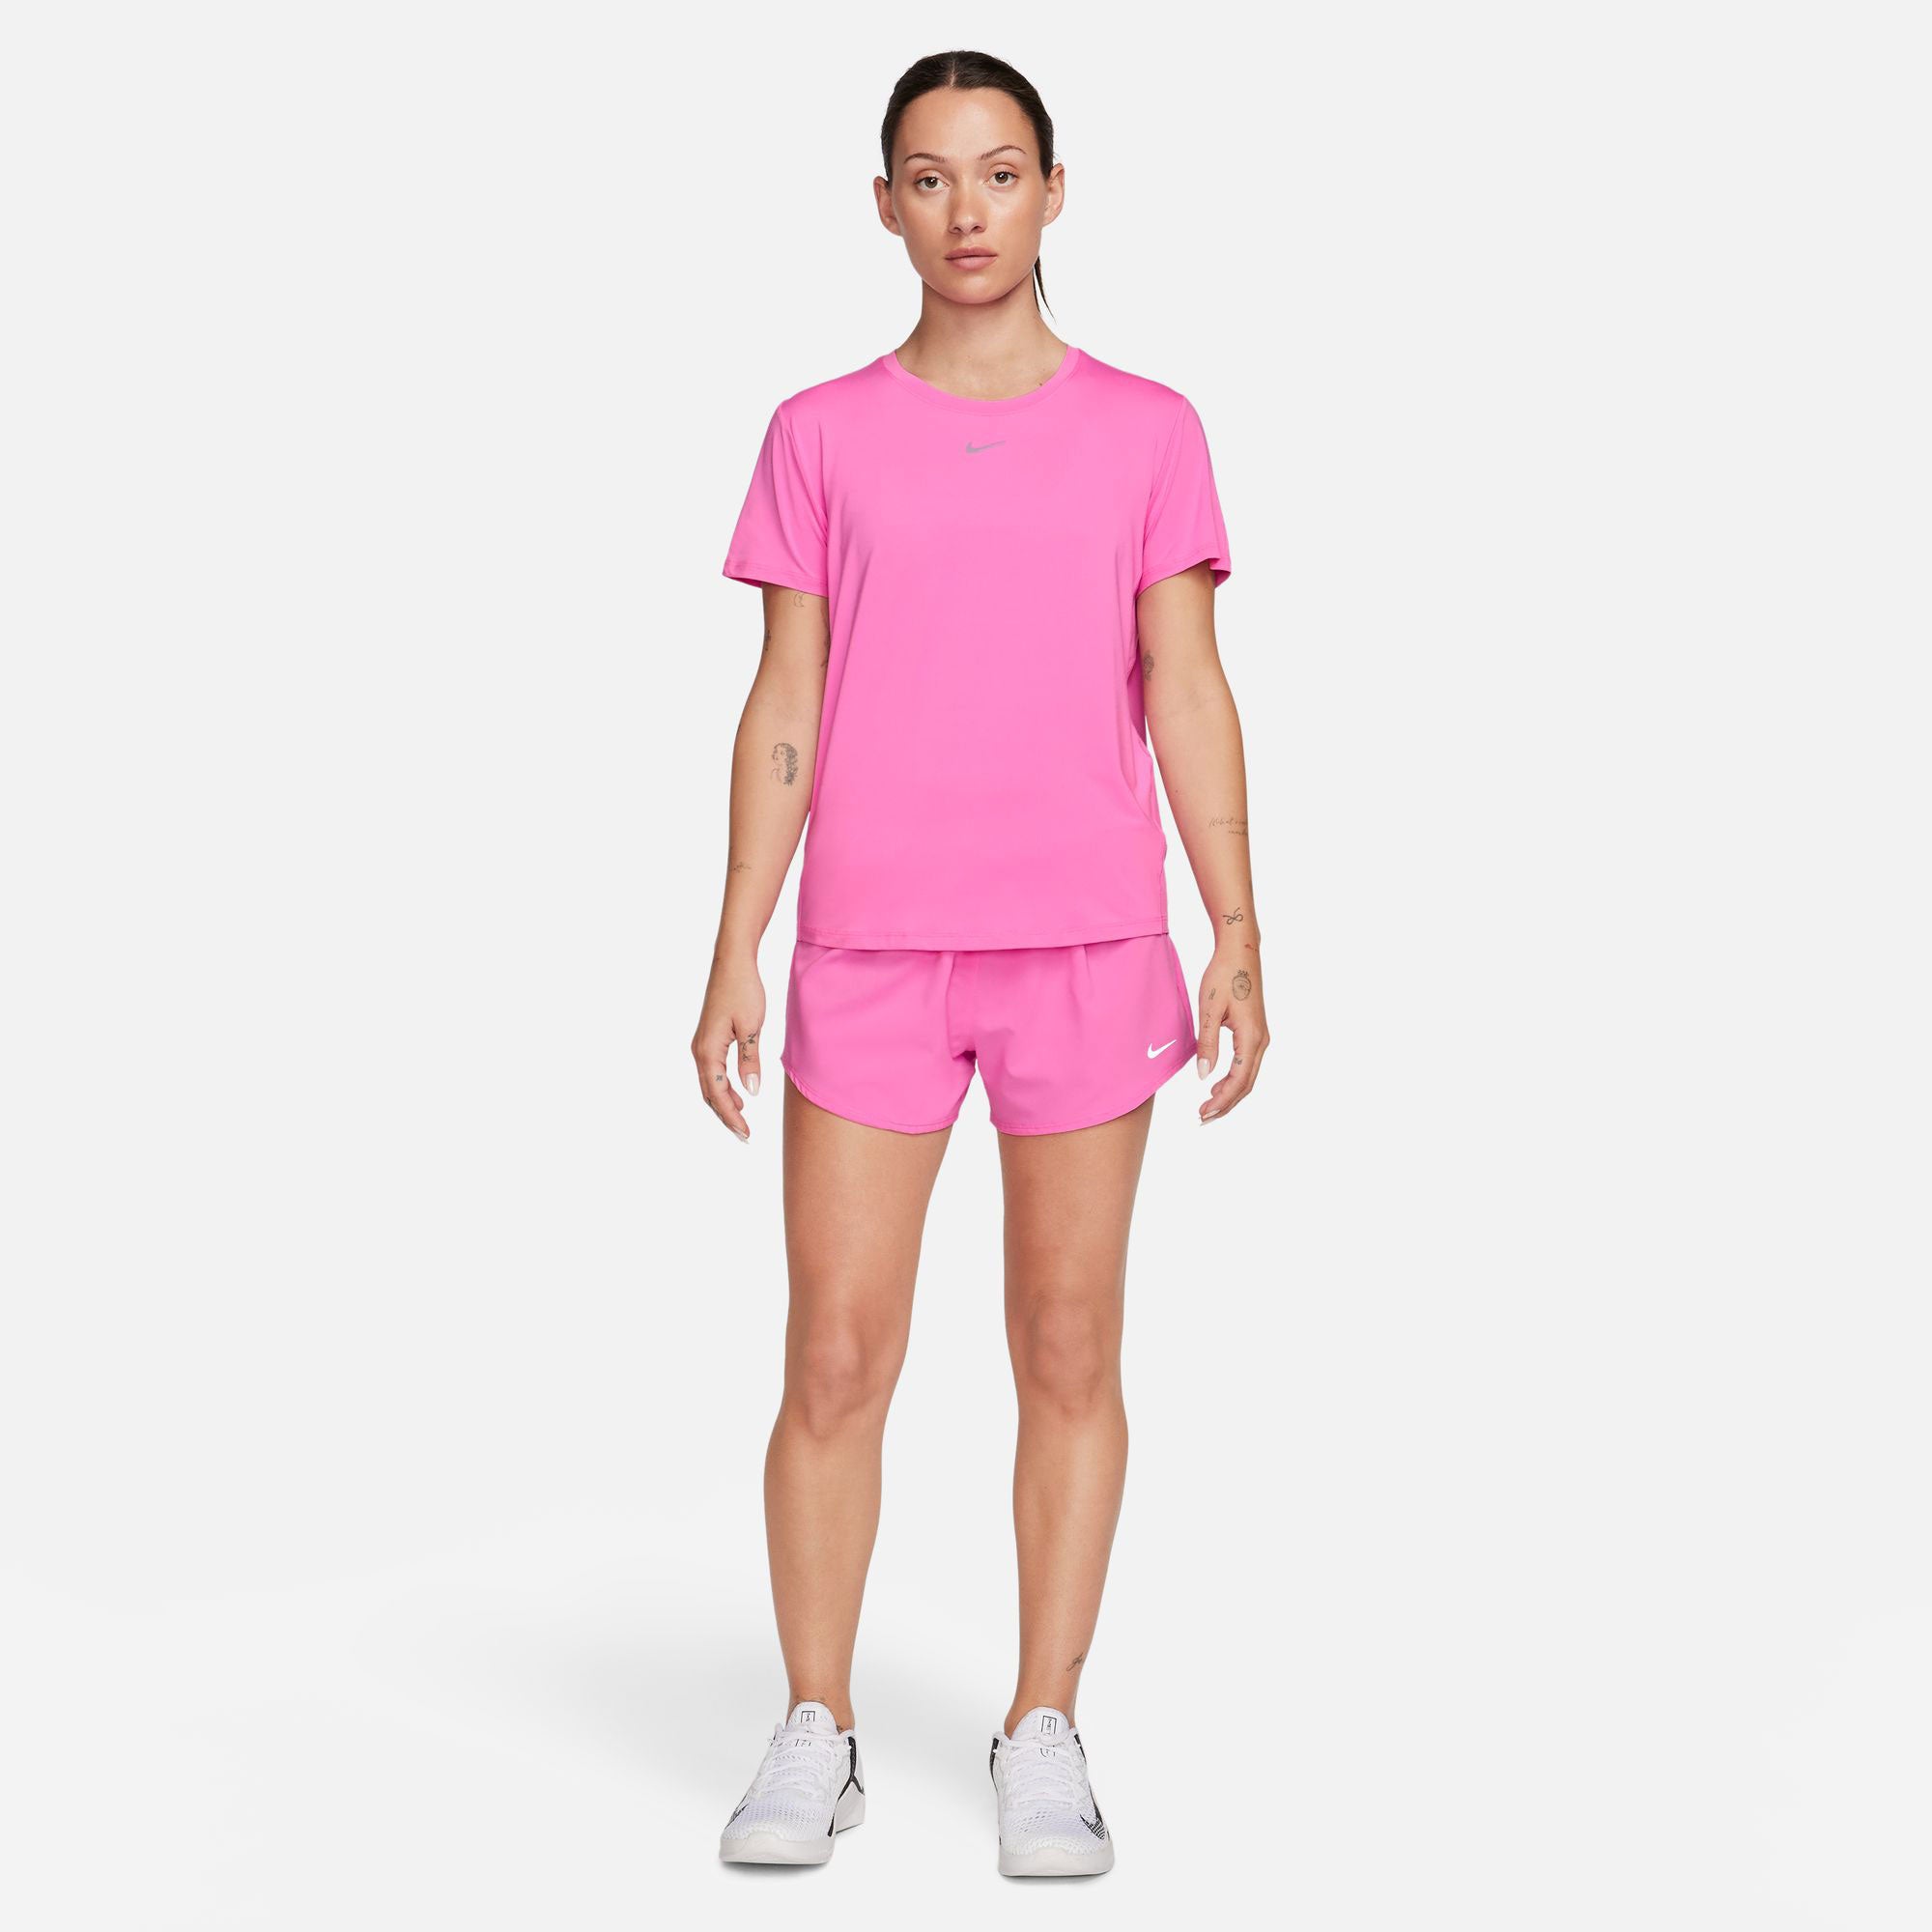 Nike One Classic Women's Dri-FIT Shirt - Pink (4)